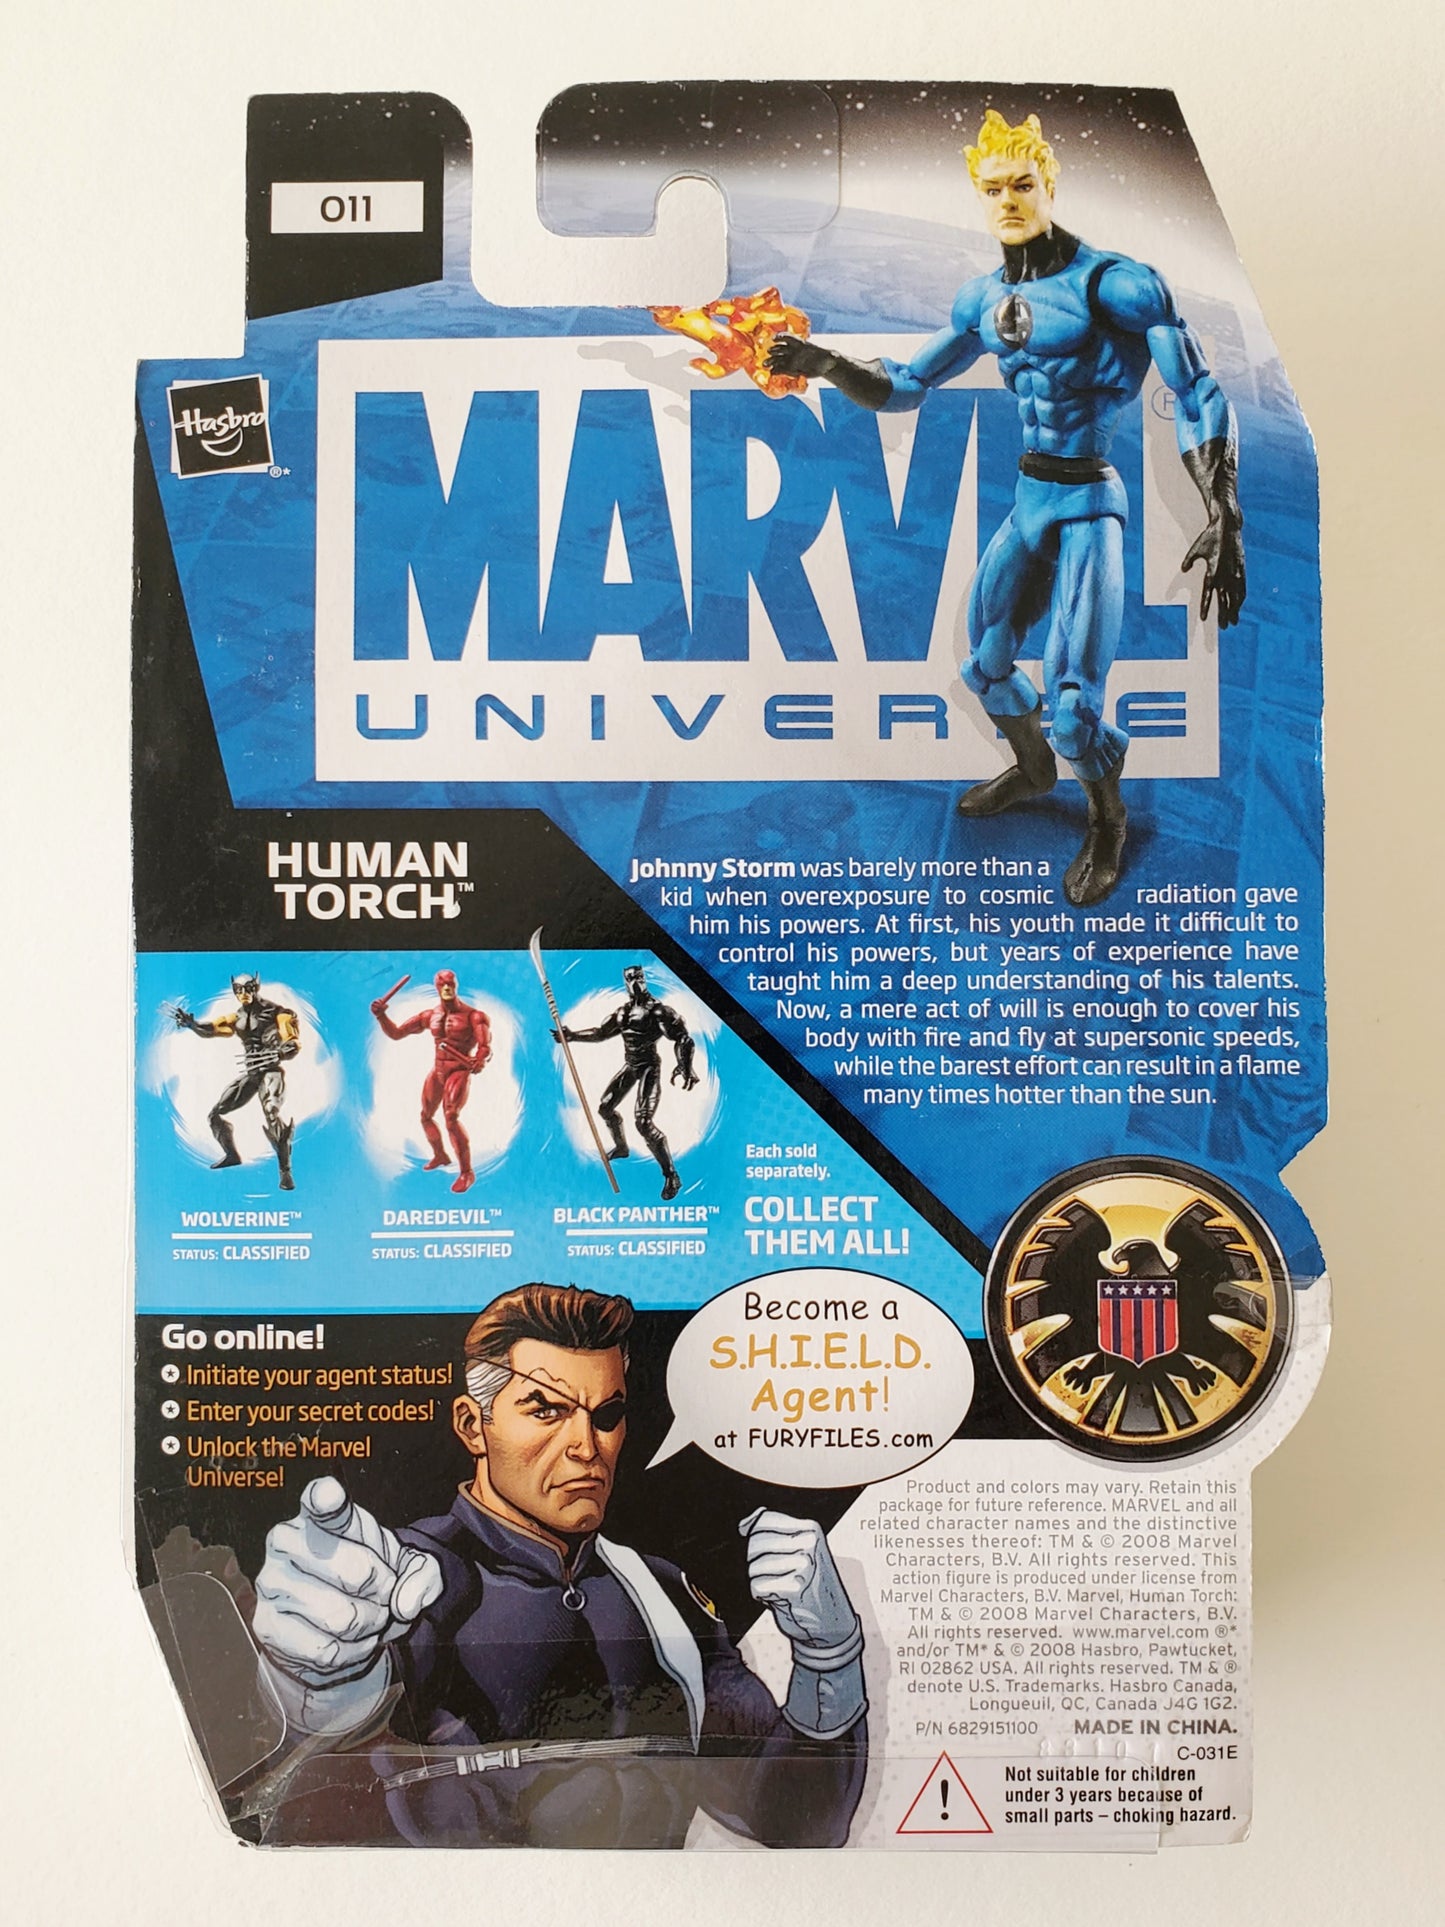 Marvel Universe Series 1 Figure 11 Human Torch (Light Blue Suit) 3.75-Inch Action Figure